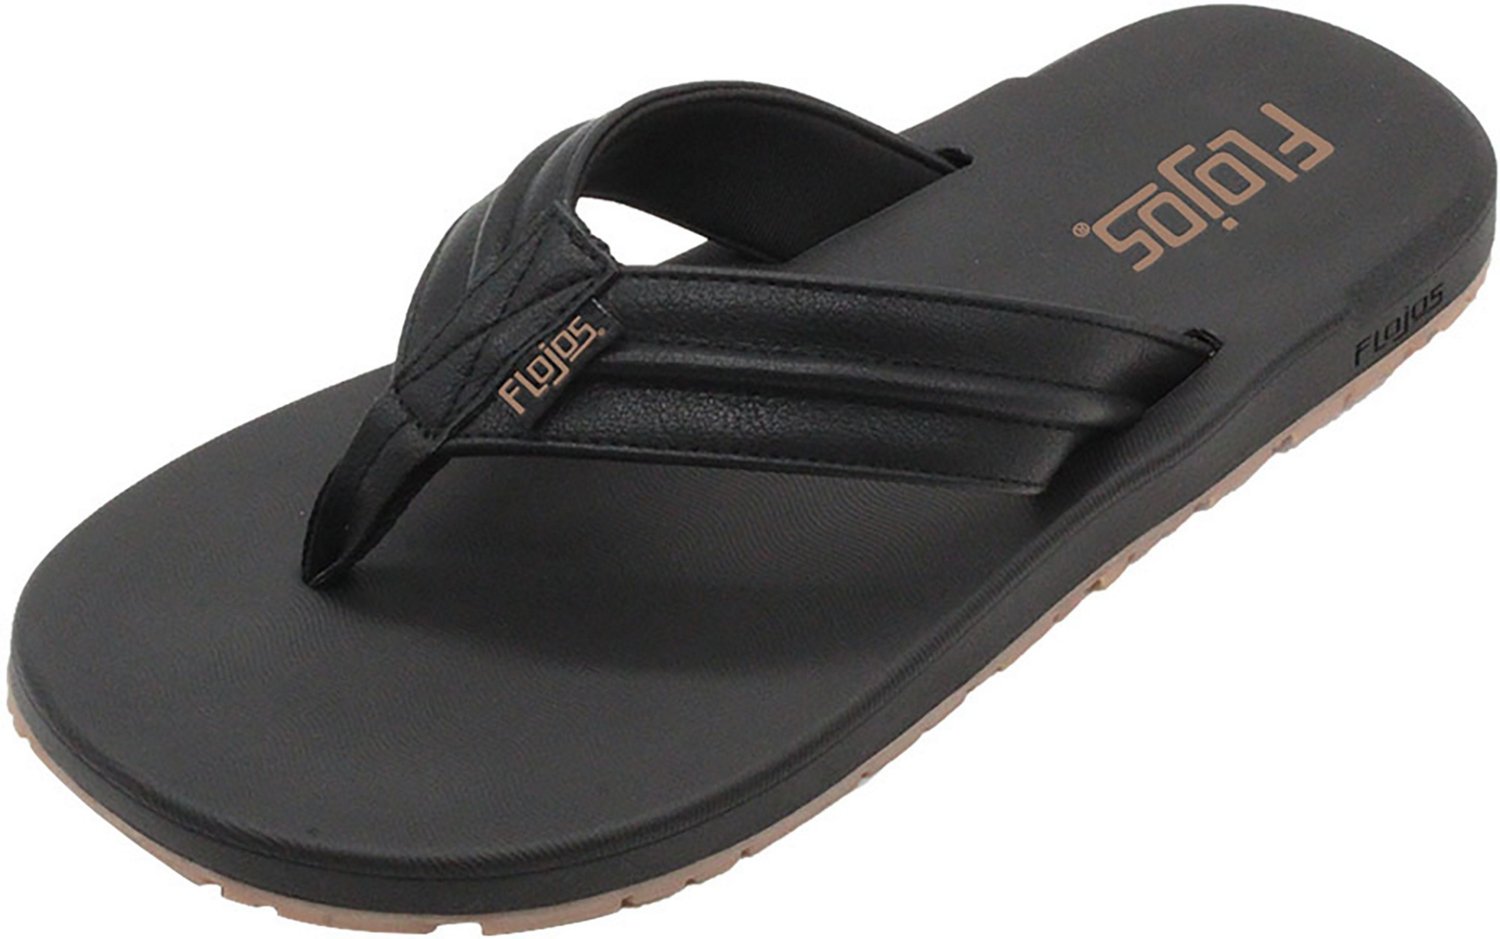 CHAPS womens slip on Memory Foam flip flop sandals black size 7-8